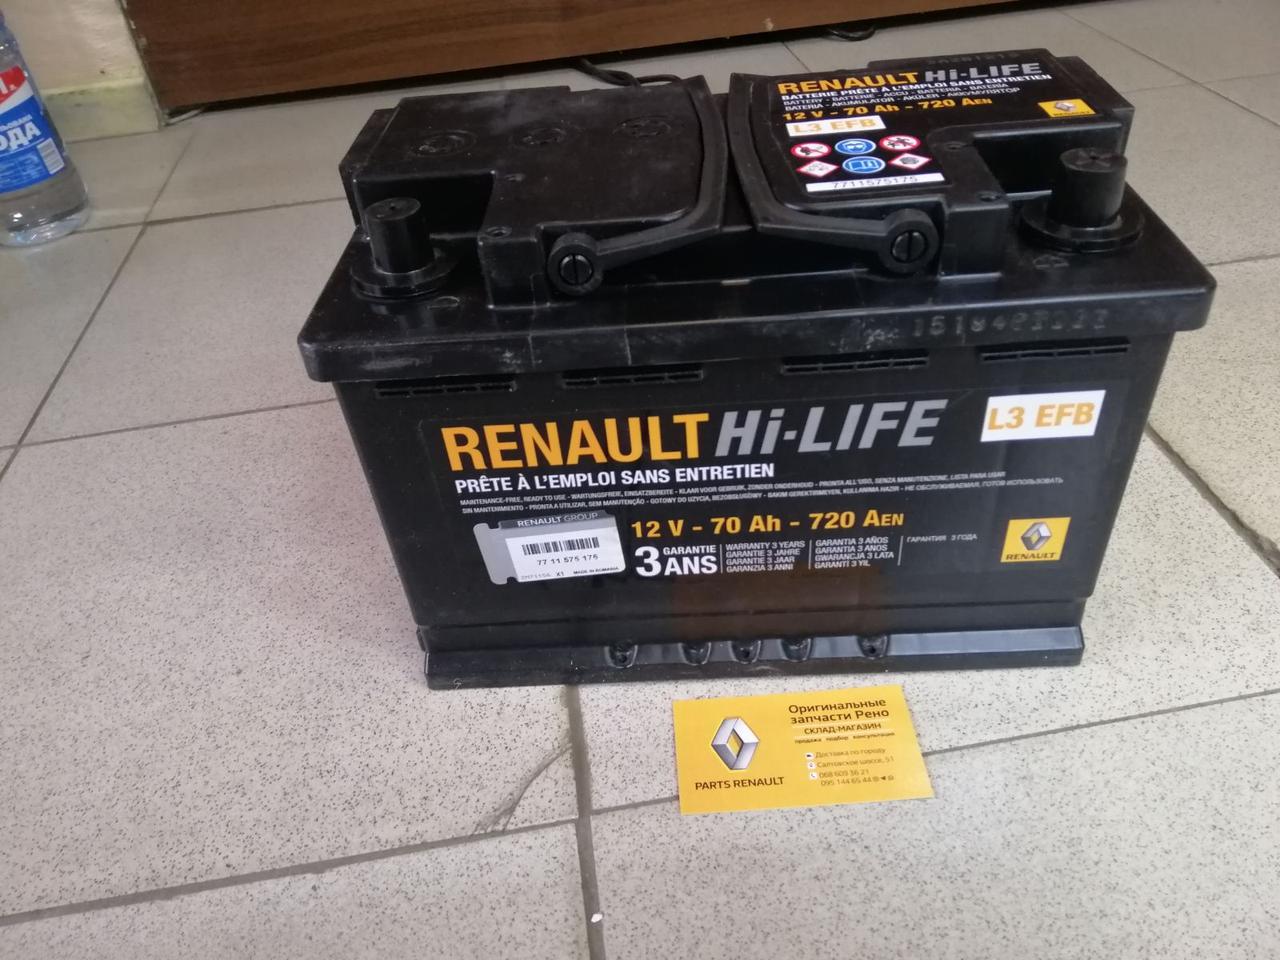 Аккумулятор 12v l3 70ah. Аккумулятор Renault Hi-Life 12v 70ah. АКБ Renault Hi-Life 70ah. Renault Hi-Life 12v 70ah 720a. Аккумулятор Renault 70ah 720a.